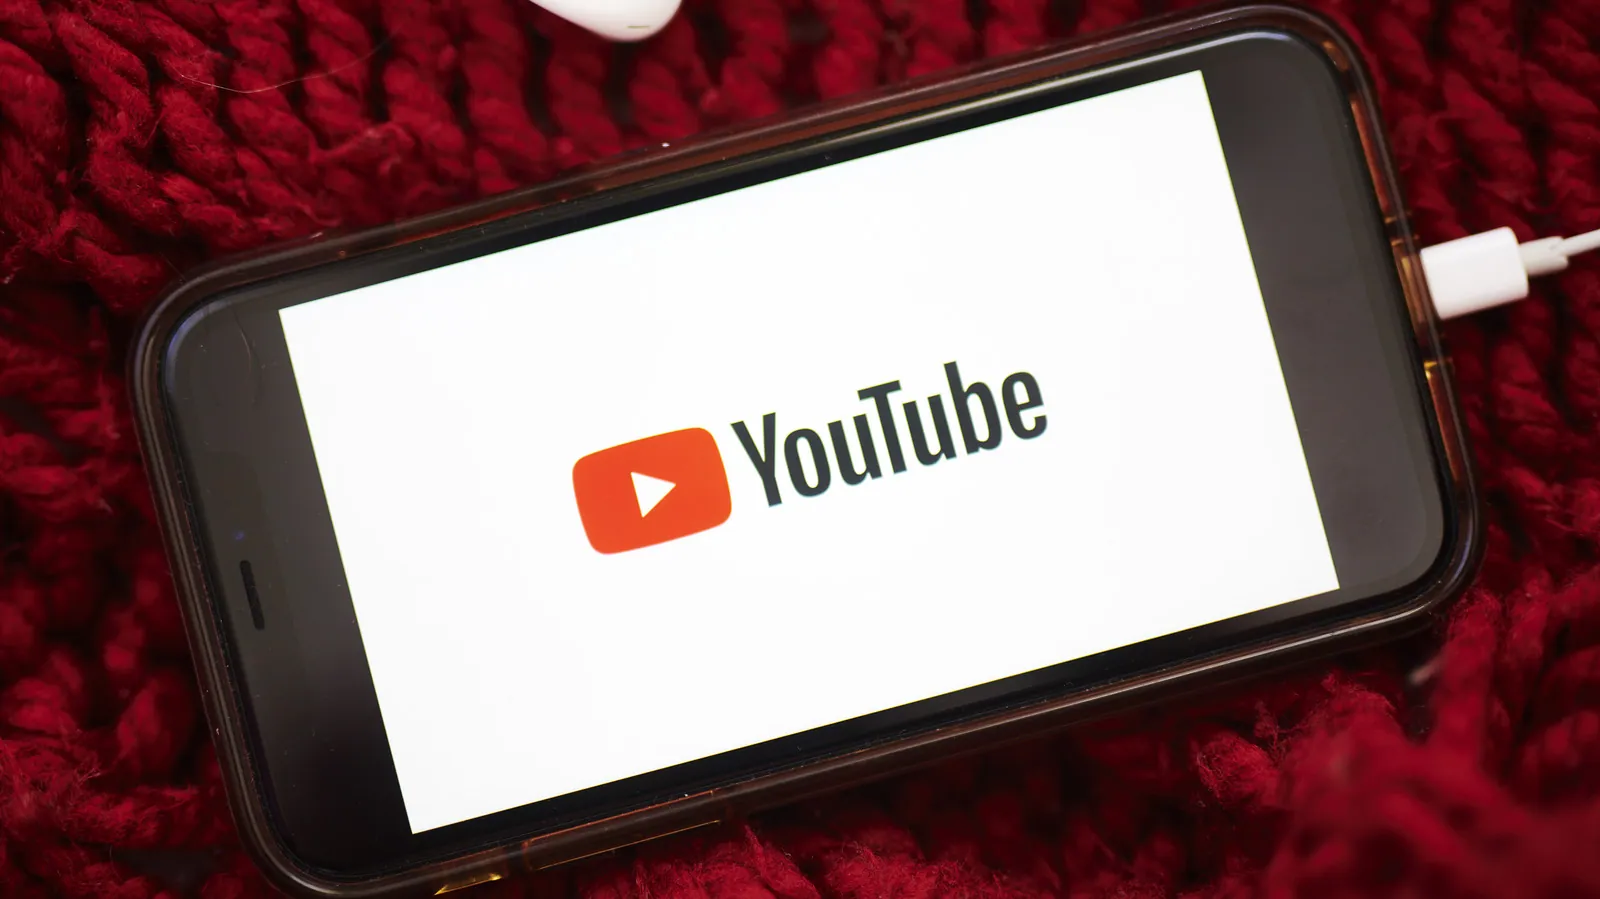 How To Fix YouTube Keeps Crashing On iPhone?